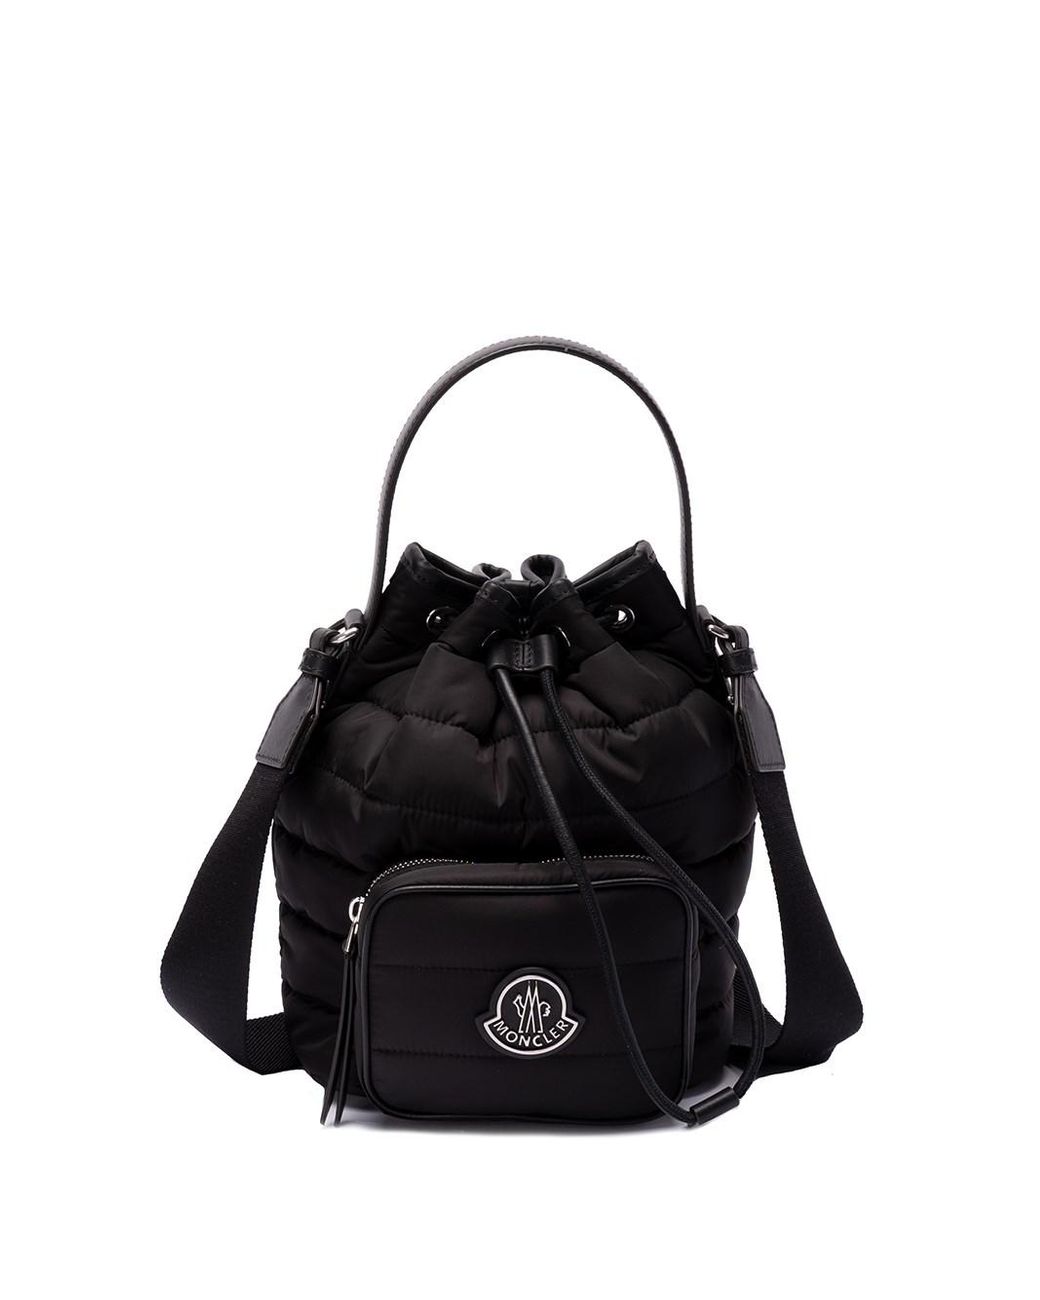 Rosetti Black Backpack Purse Handbag Satchel Mini Backpack | eBay